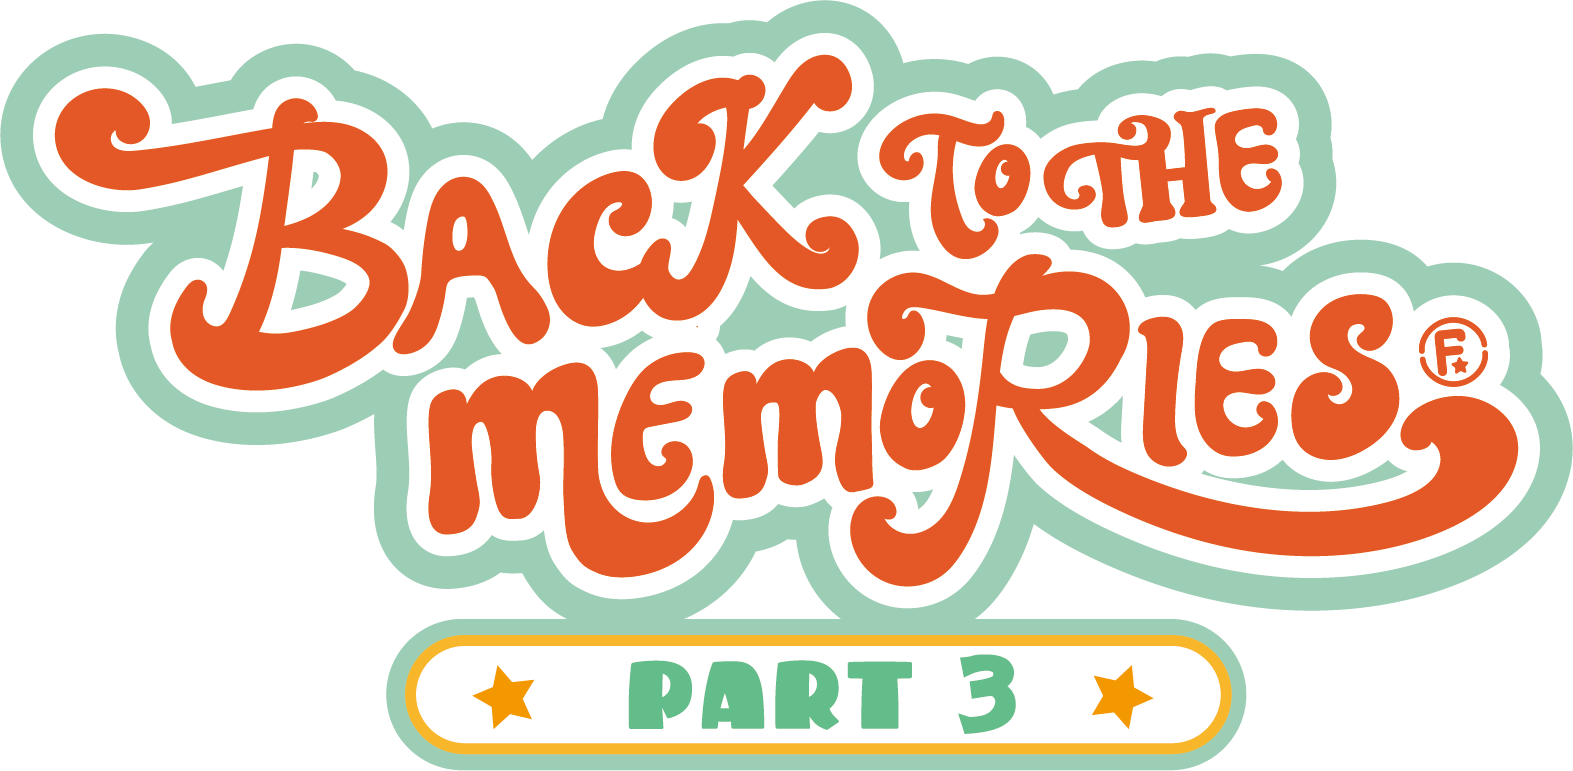 BACK TO THE MEMORIES PART3【大阪公演】 | Fantastage